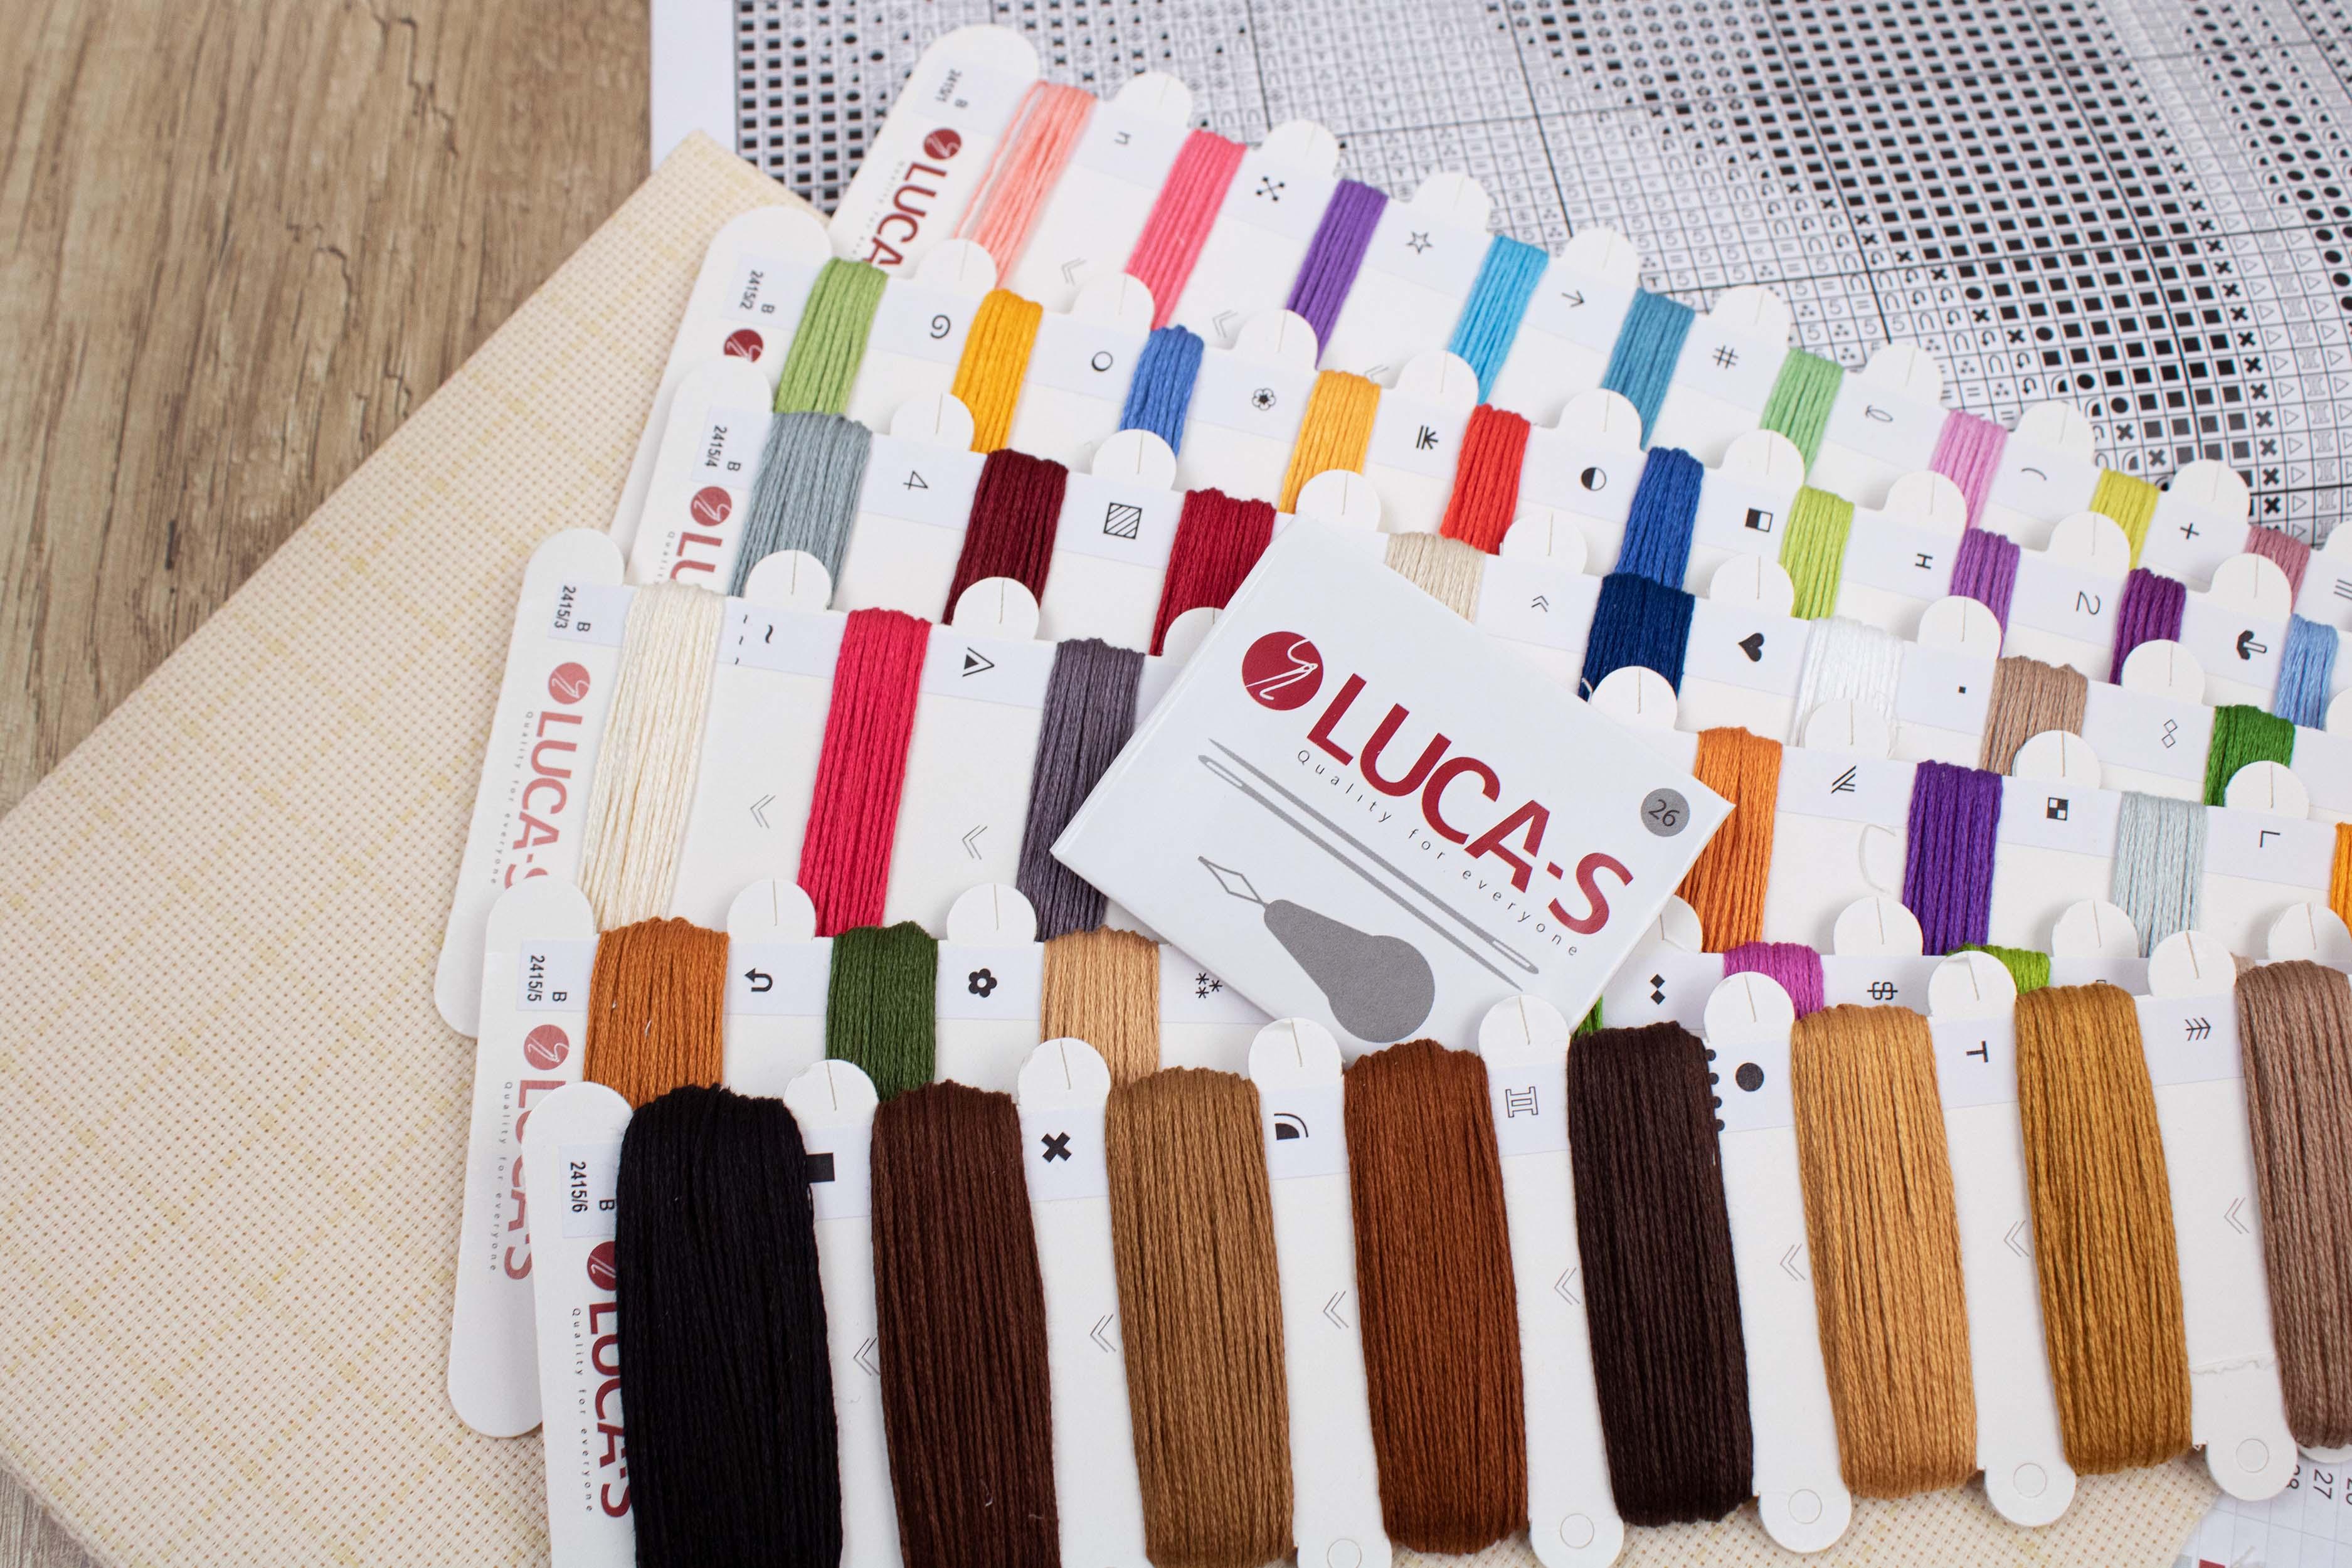 Cross Stitch Kit Luca-S - Puppy Picasso, B2415 - Luca-S Cross Stitch Kits